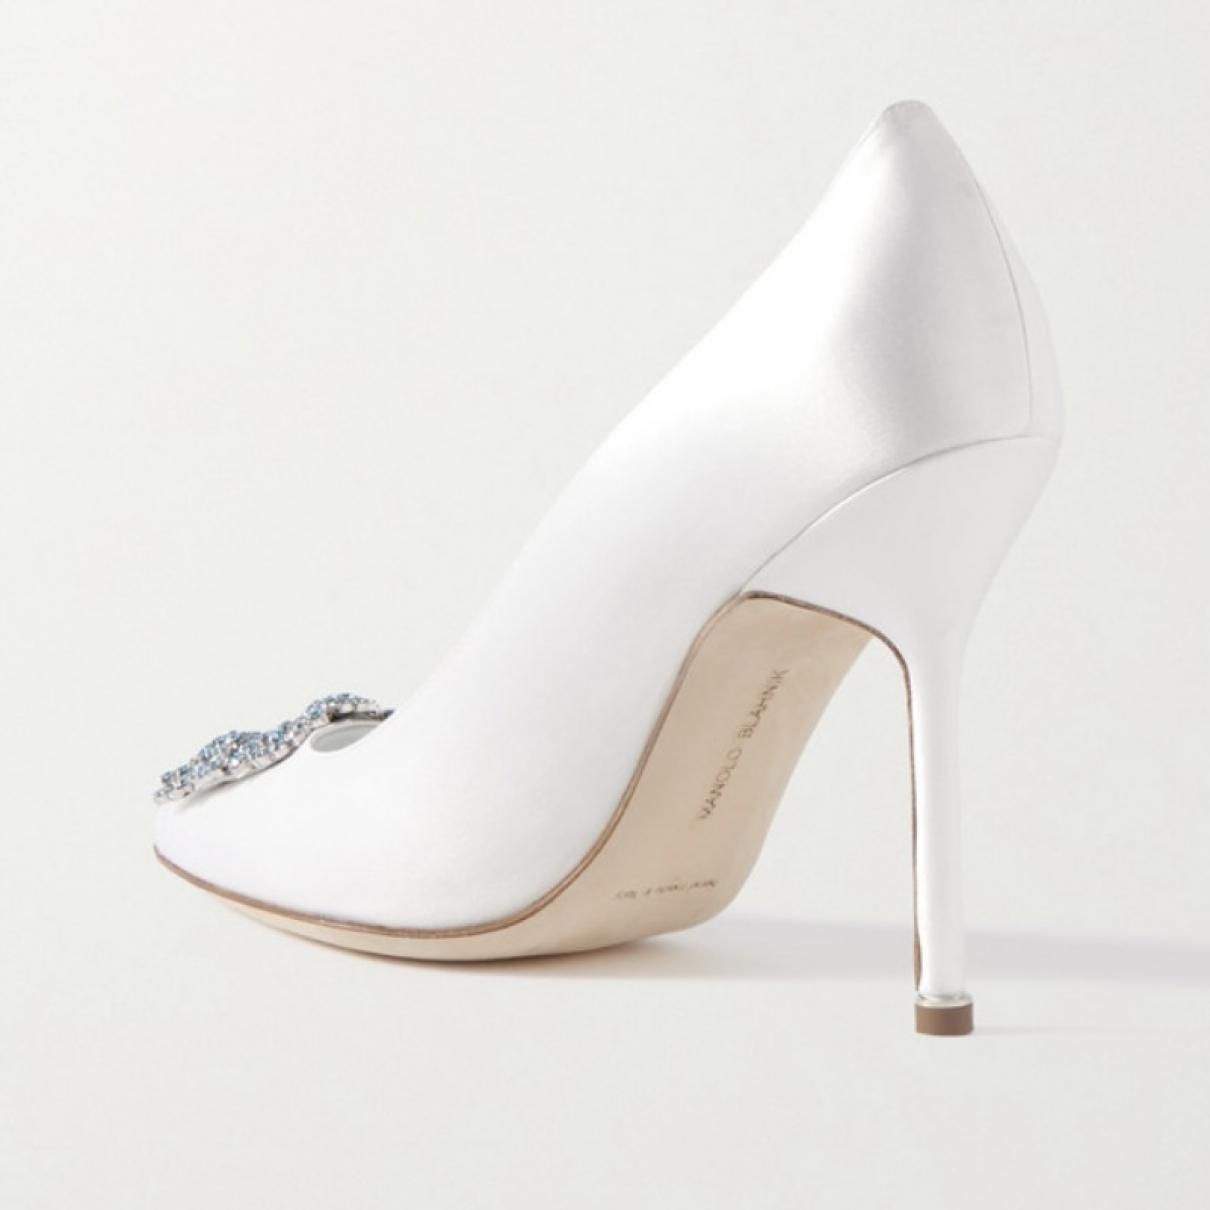 Hangisi leather heels - 3